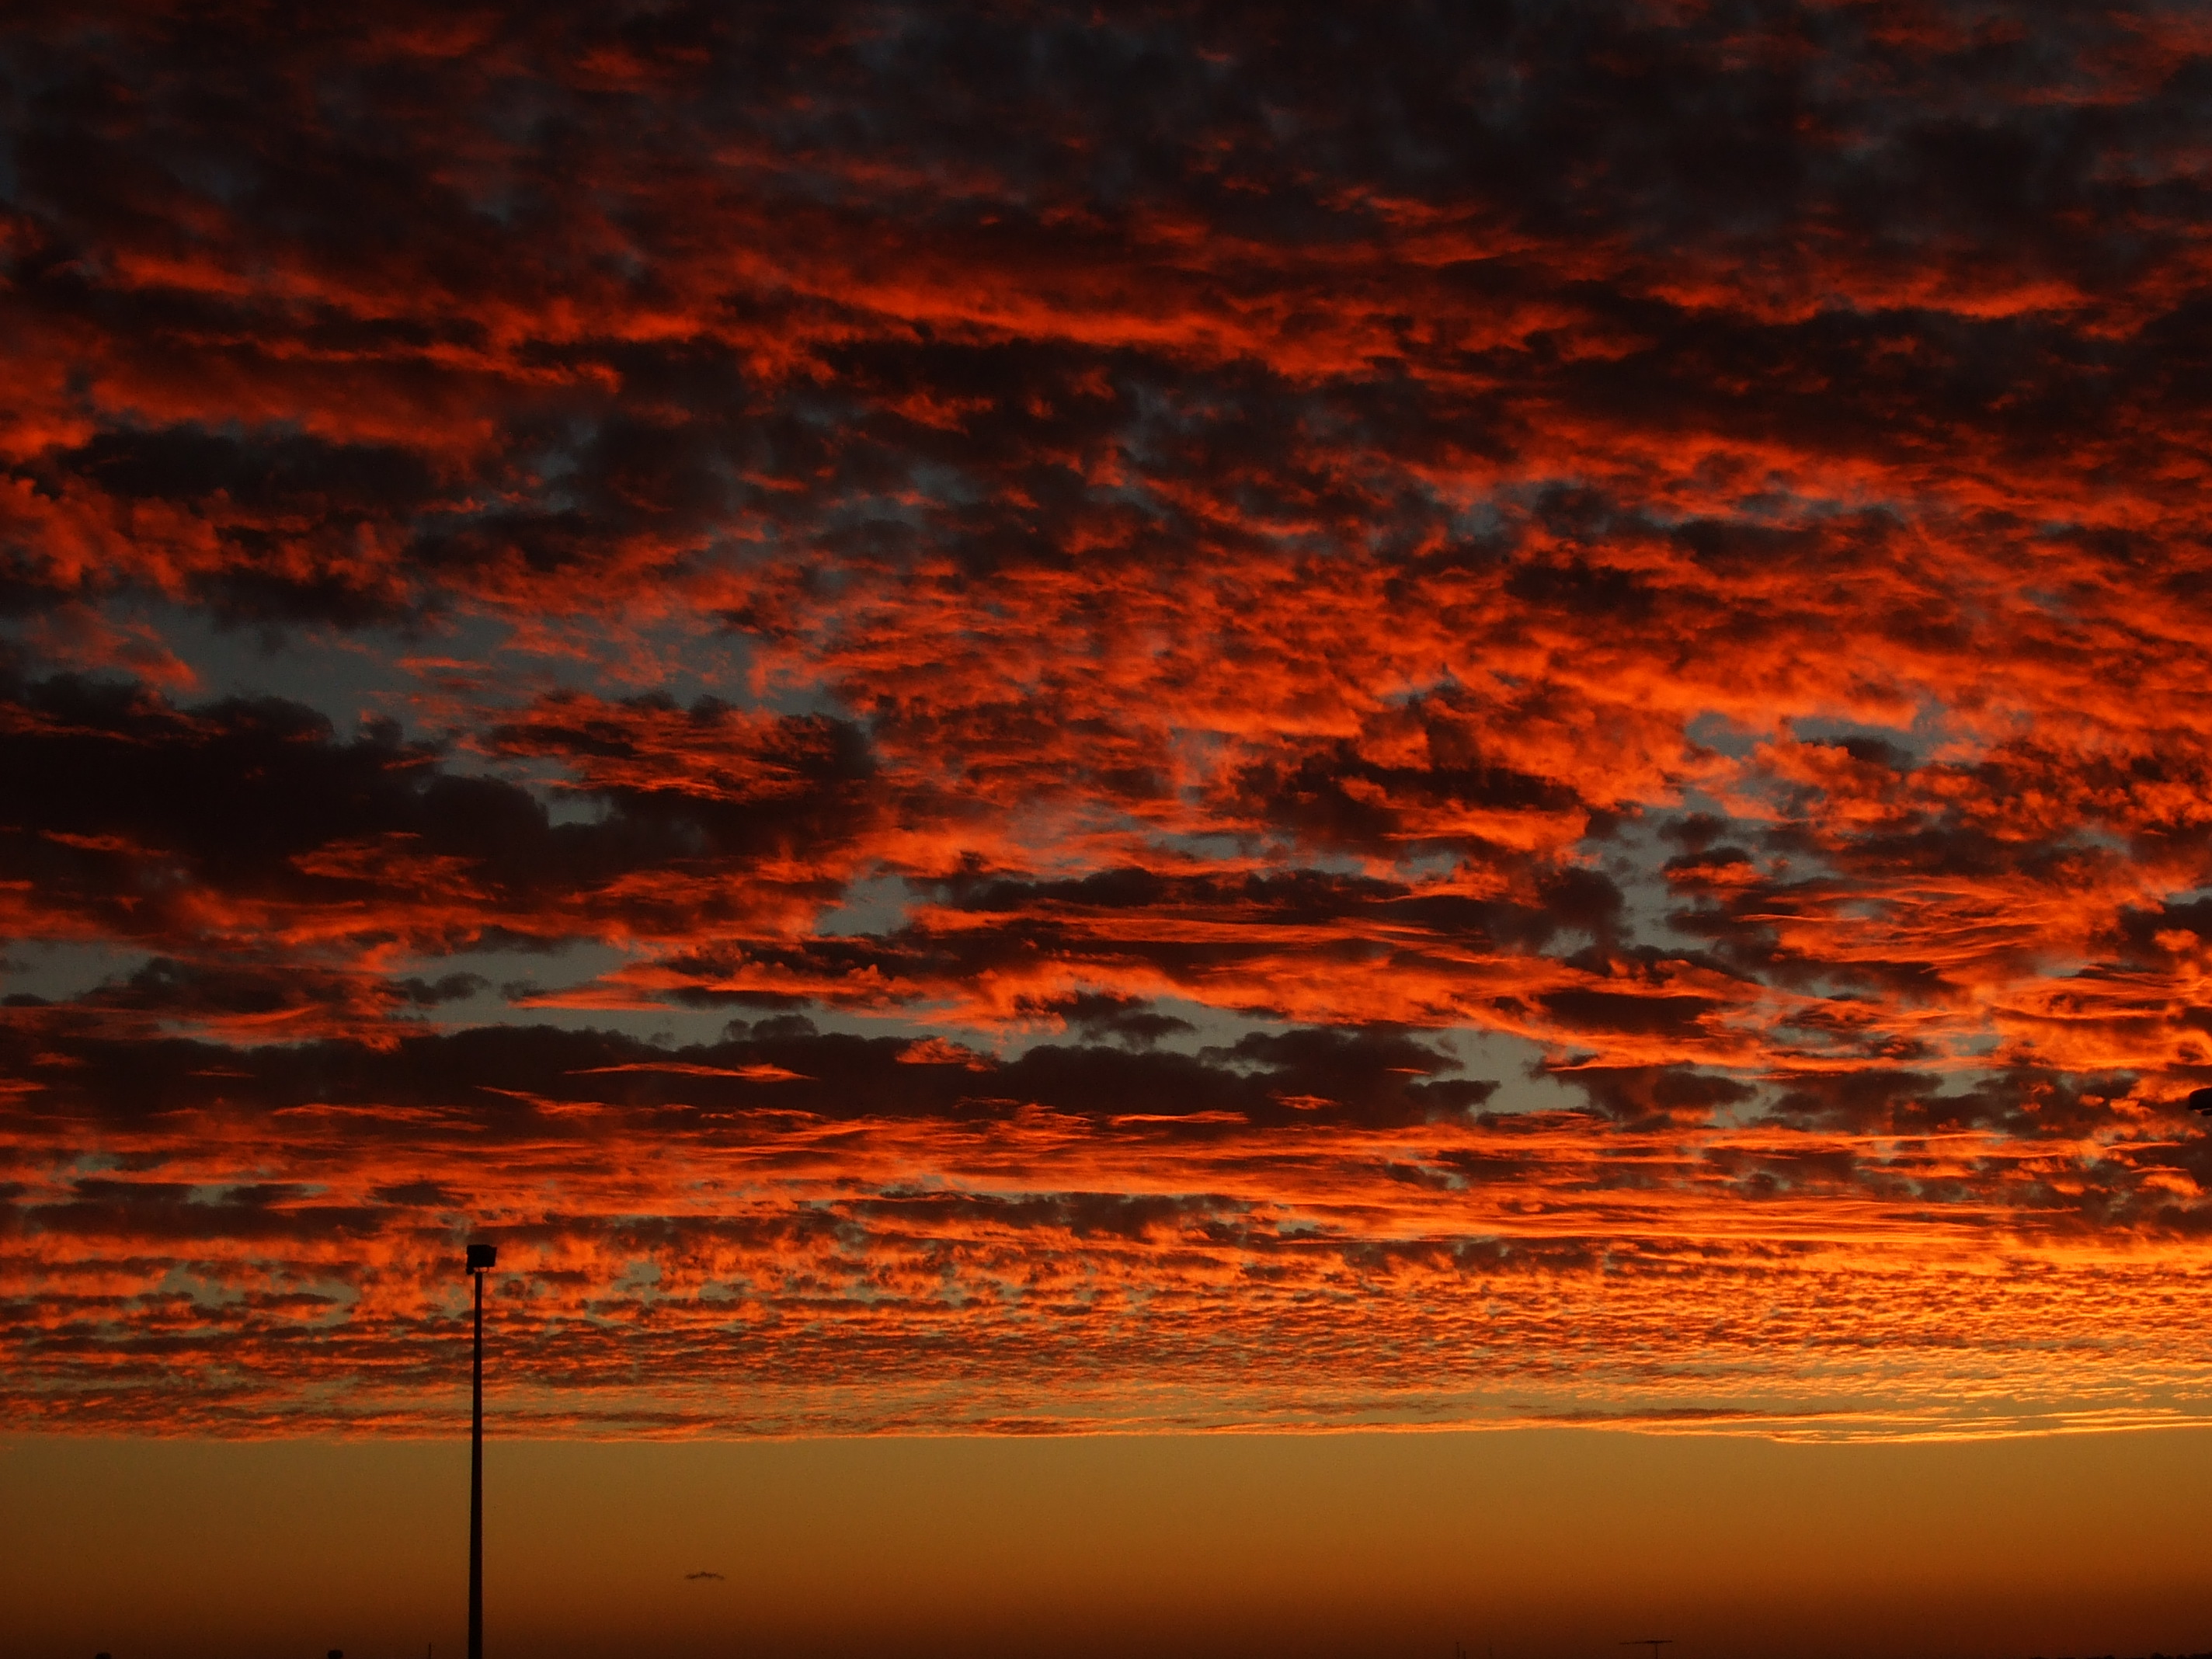 Fire Sky Sunset by IGotNoThumbs on DeviantArt